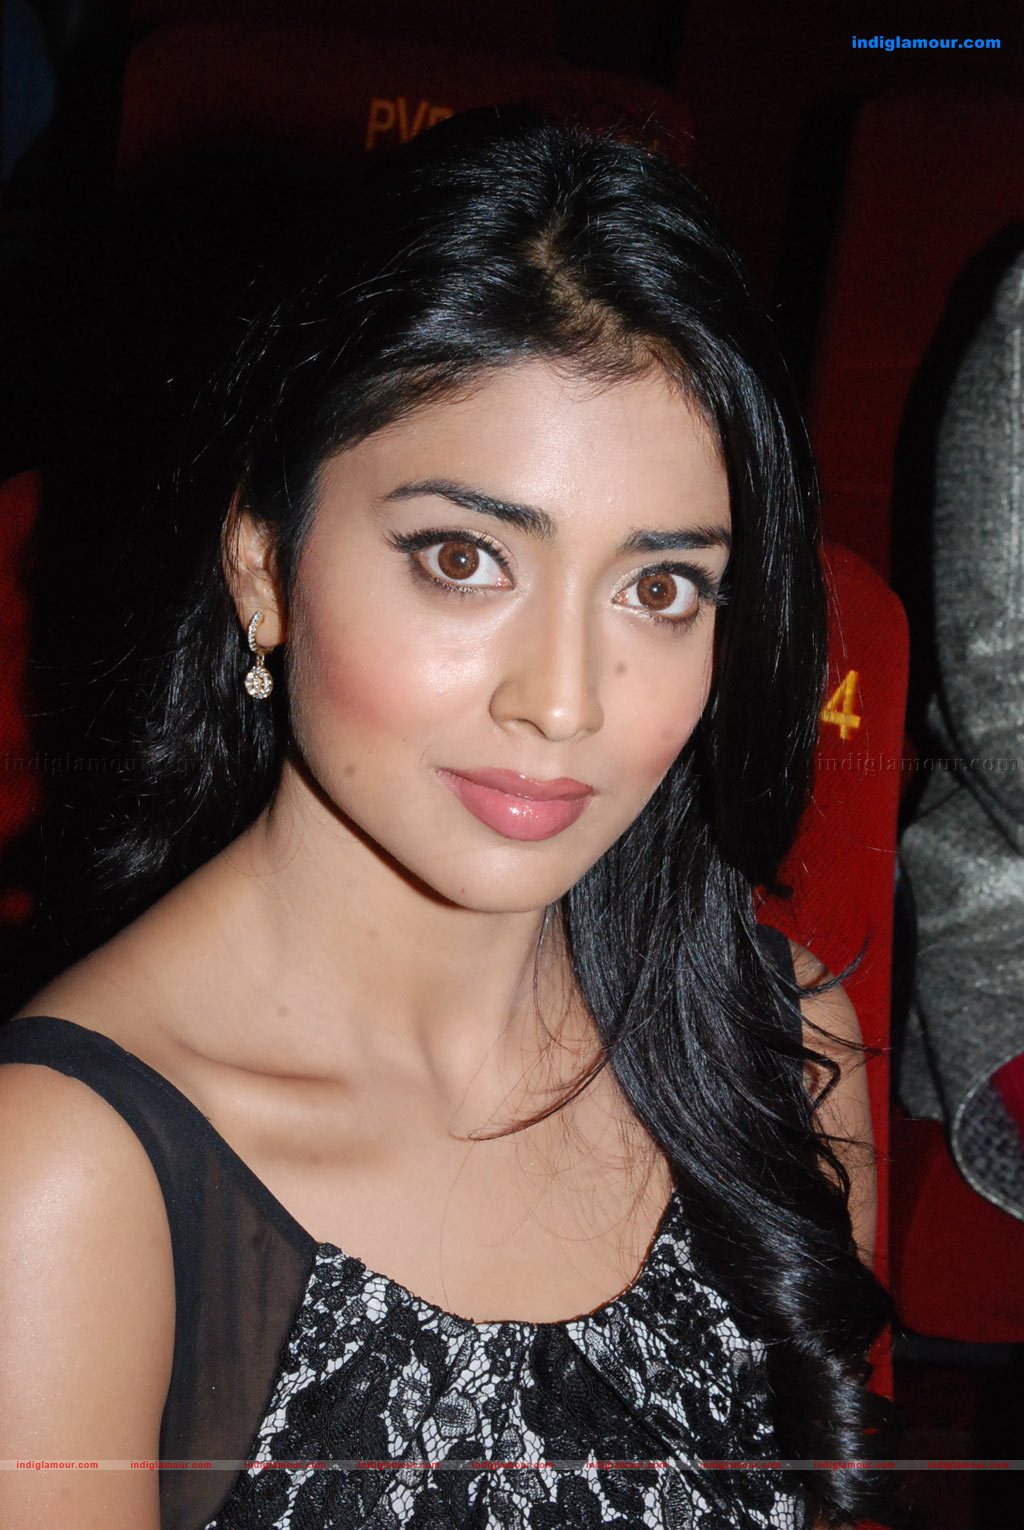 https://i.indiglamour.com/photogallery/tamil/actress/2011/jun16/Shriya-Saran-2/normal/Shriya-Saran-2_10795.jpg